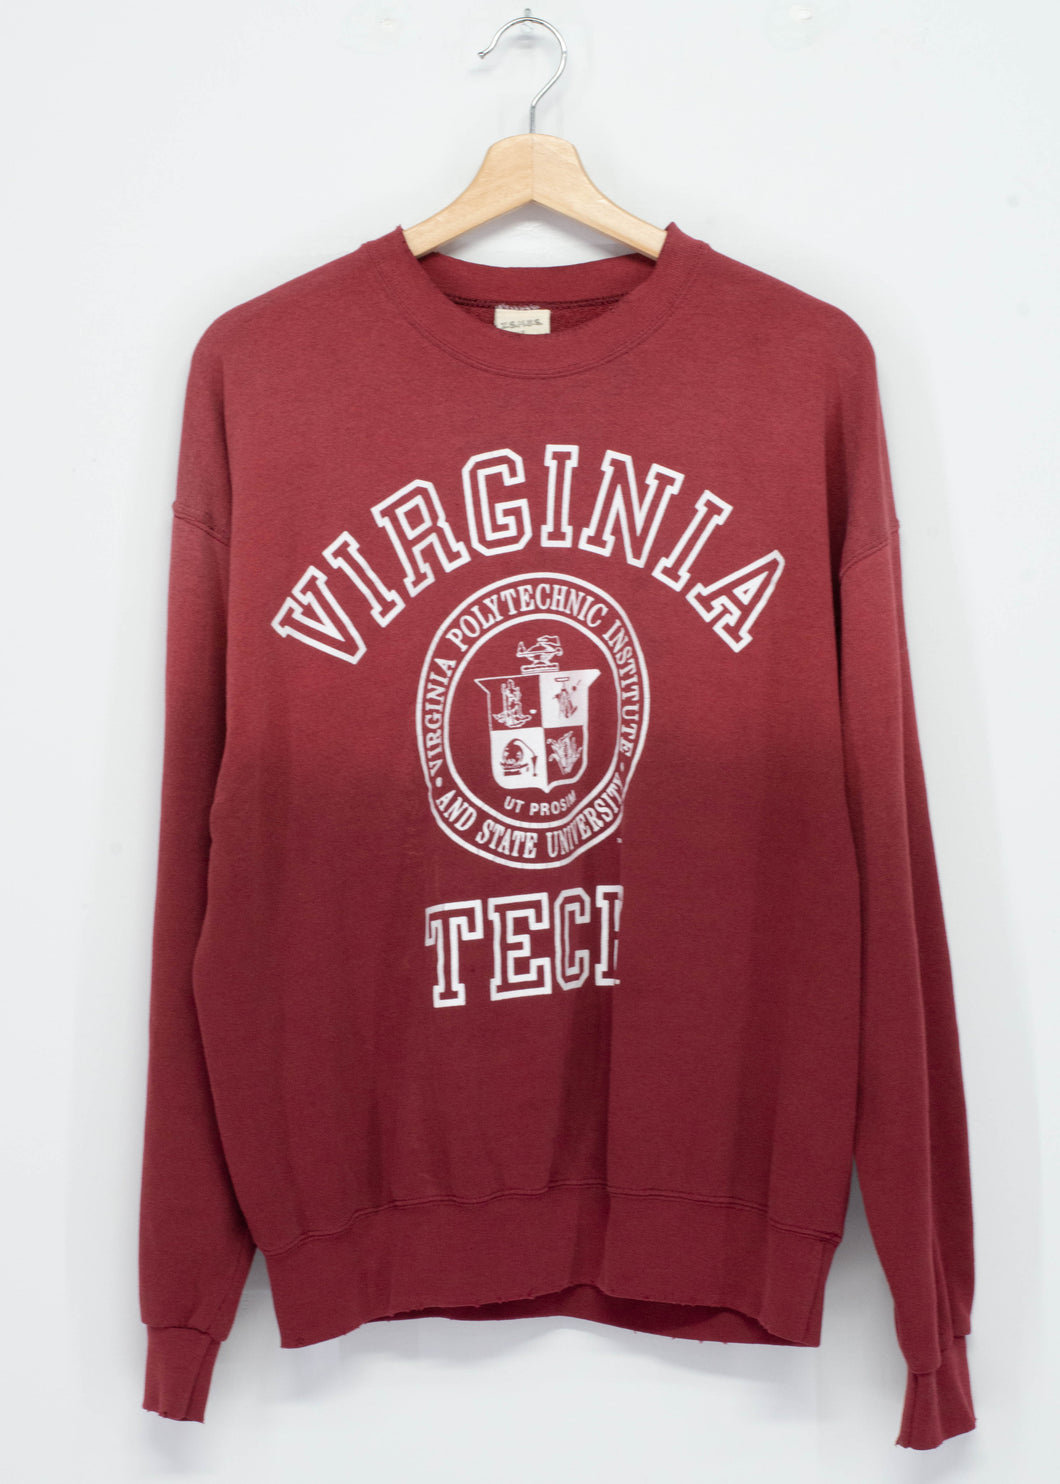 Virginia Tech Sweatshirt - M/L